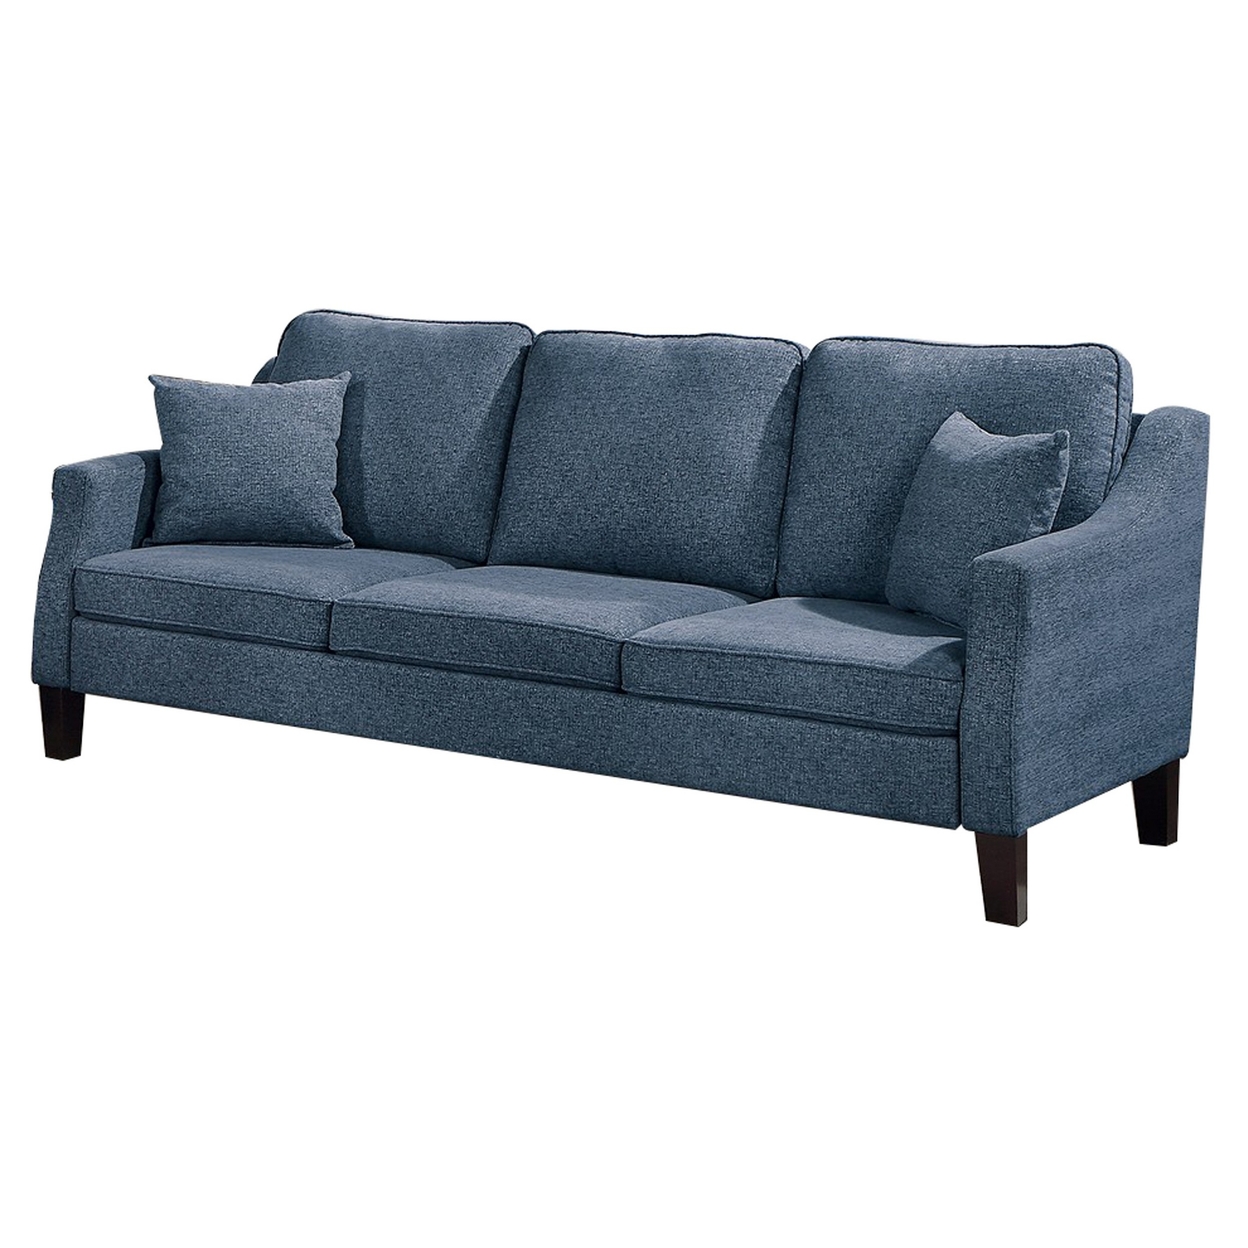 Gaia 2 Piece Sofa And Loveseat Set, 4 Throw Pillows, Cushioned Navy Blue- Saltoro Sherpi